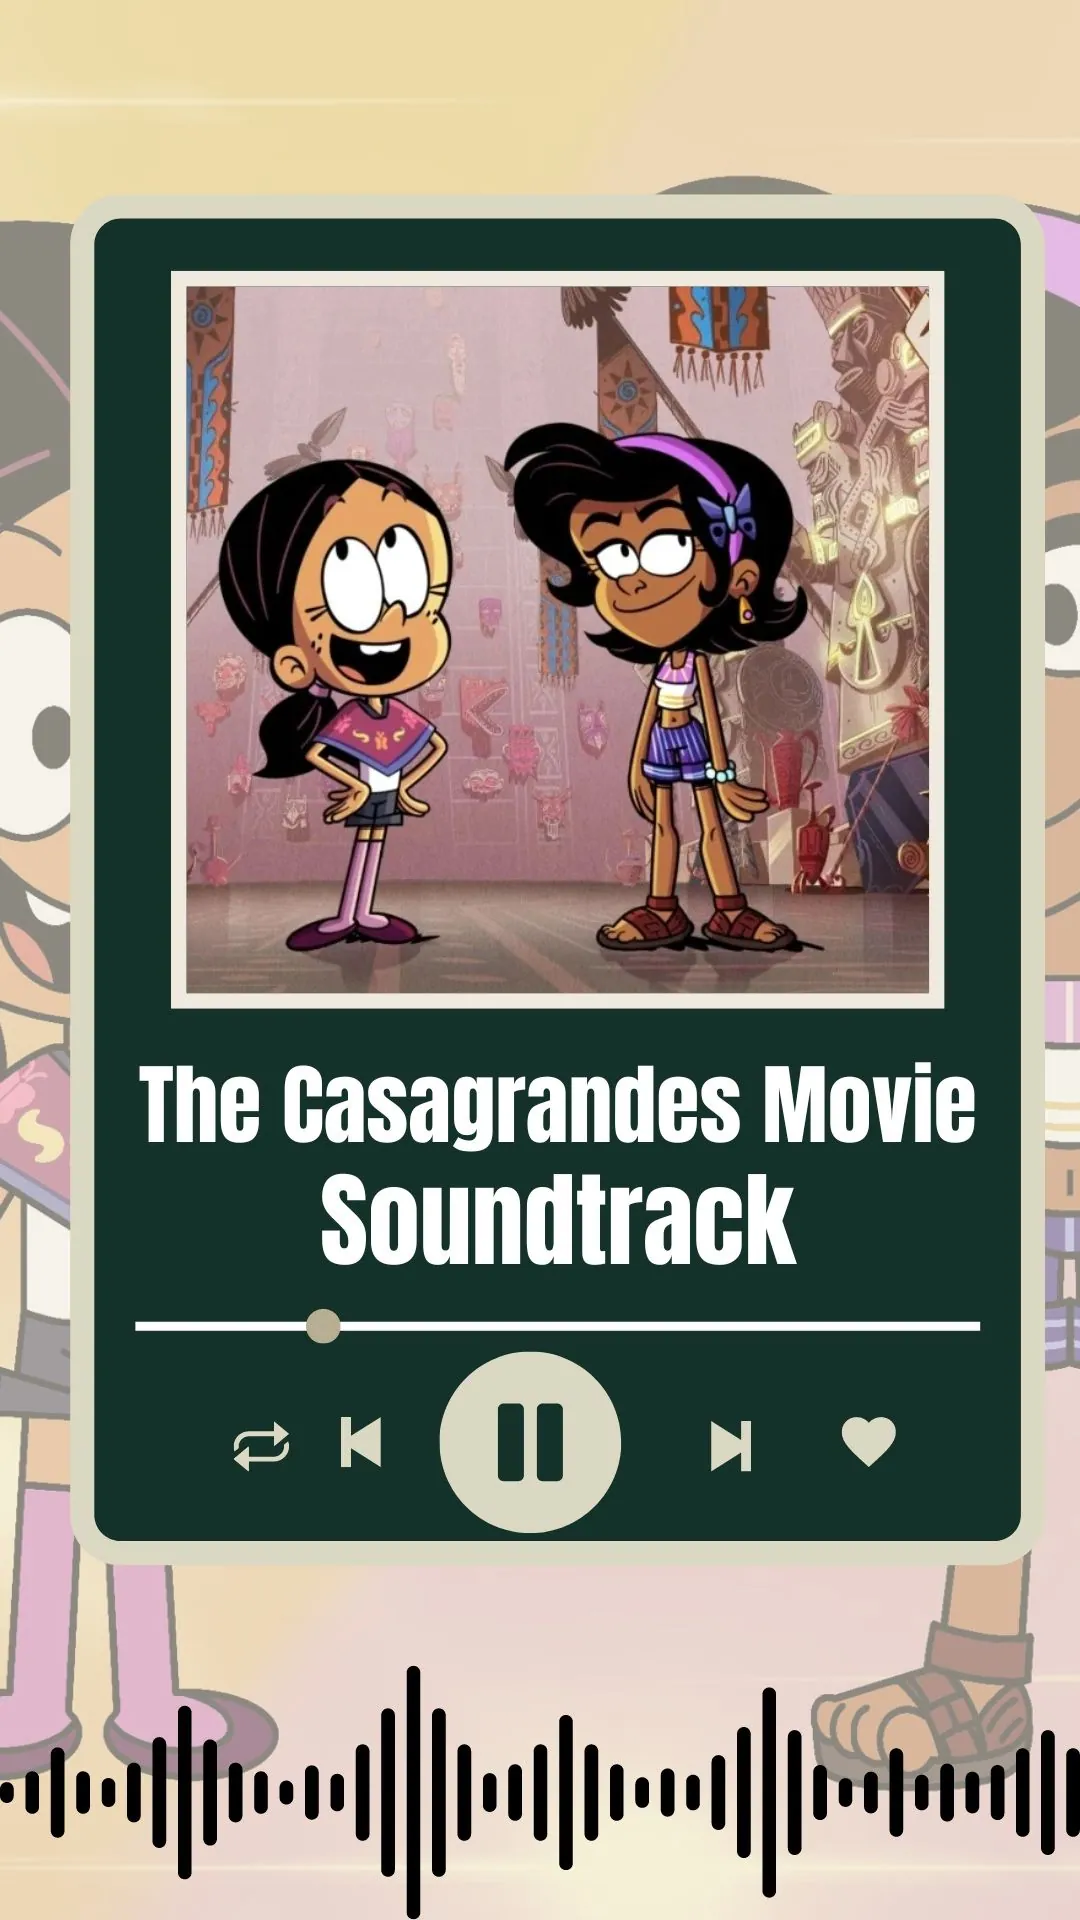 The Casagrandes Movie Soundtrack